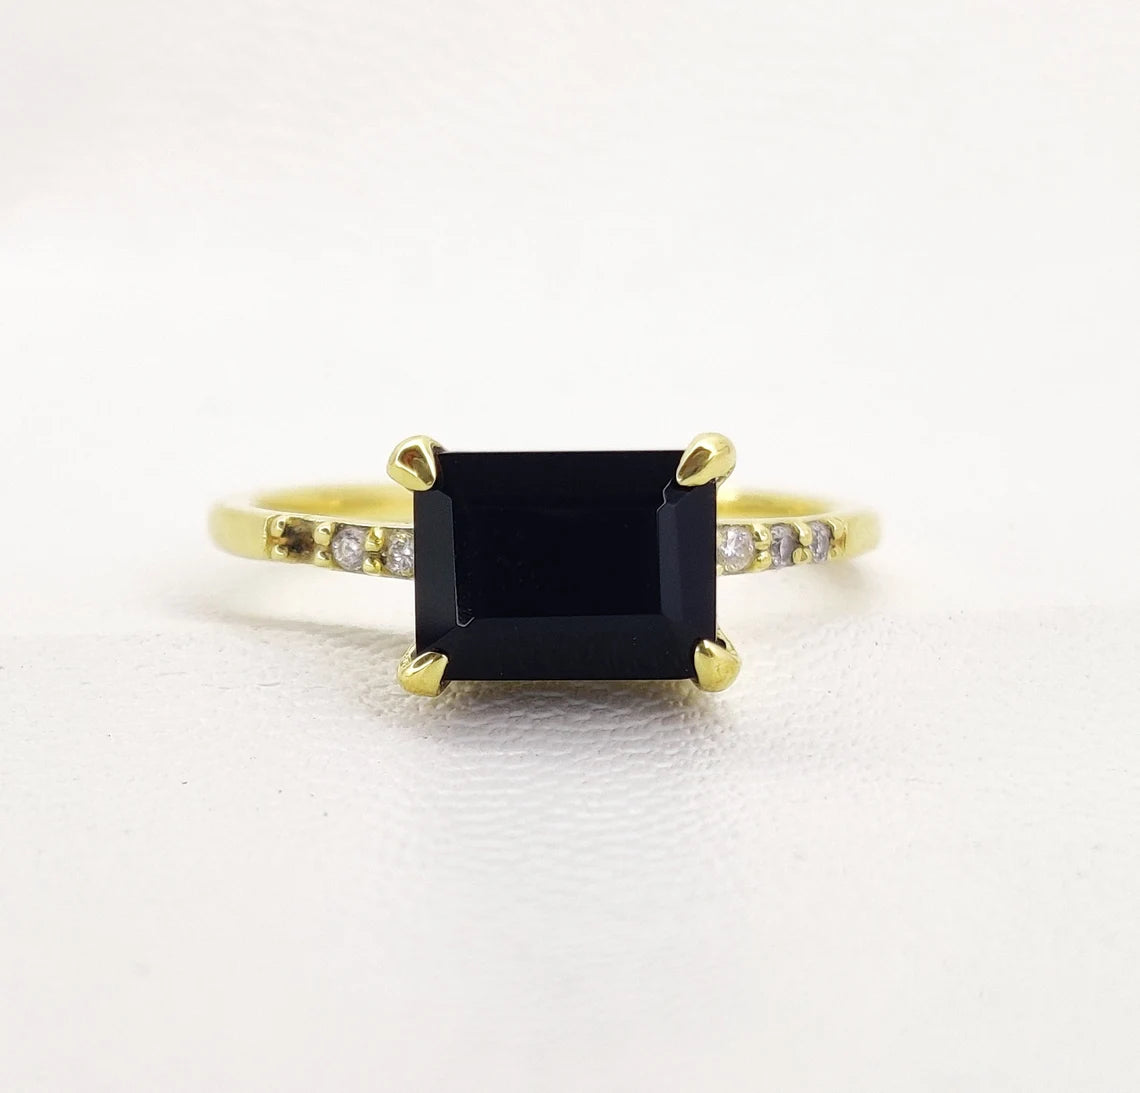 Black Onyx Gold Ring - Black Onyx Octagon Ring - Deep Black Ring - CZ Onyx Ring - Black Stone Ring - Minimalist Ring - Handmade Ring